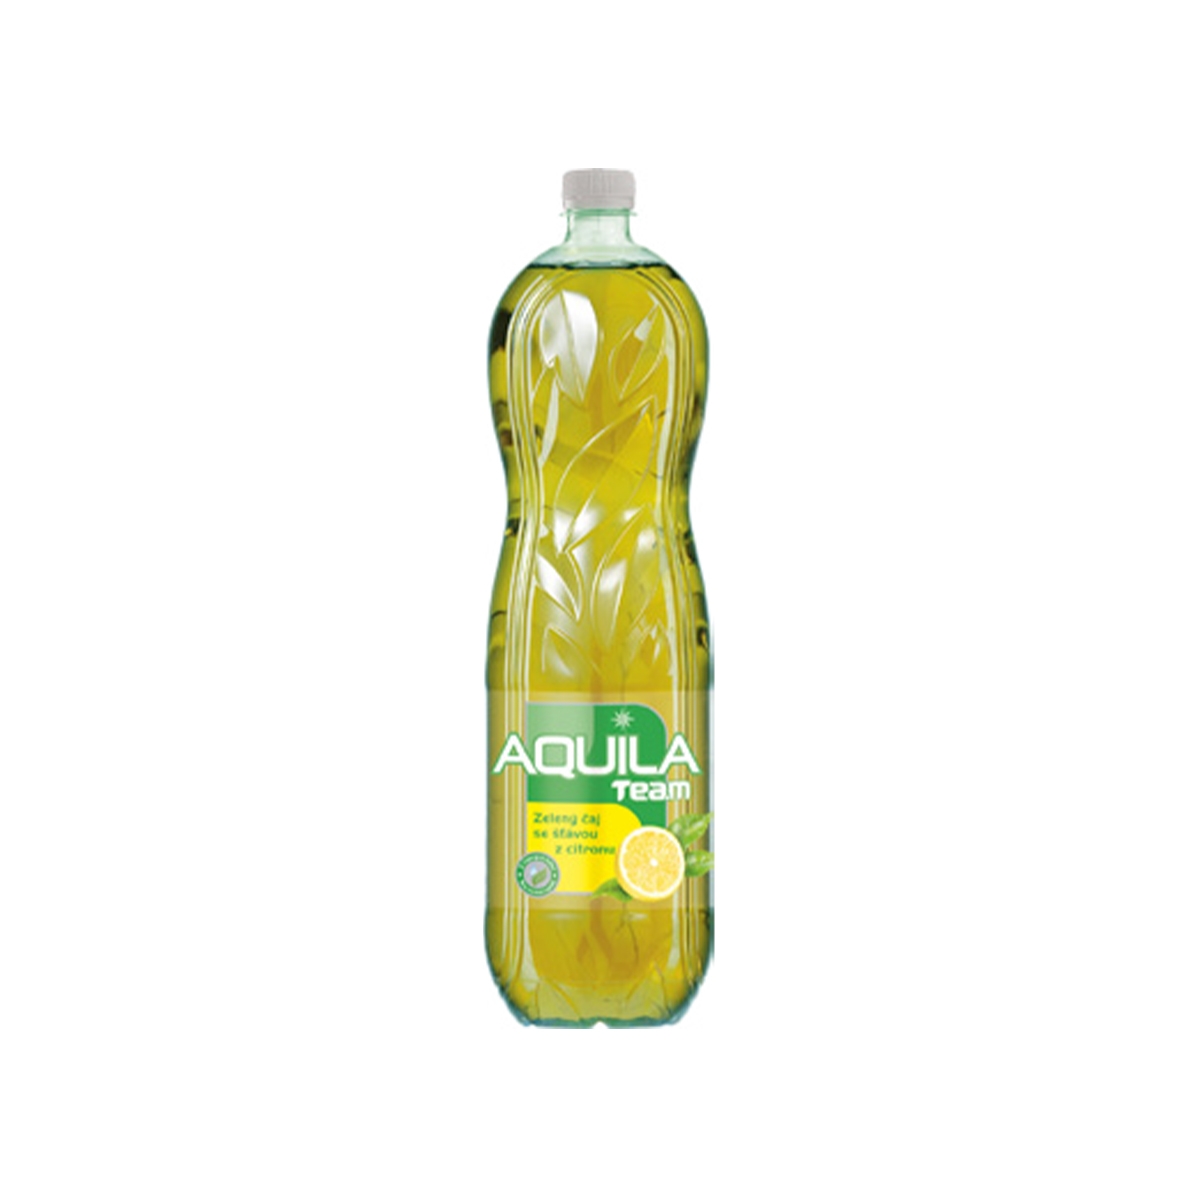 Aquila Tea.m zelený čaj s citronem 1,5 l